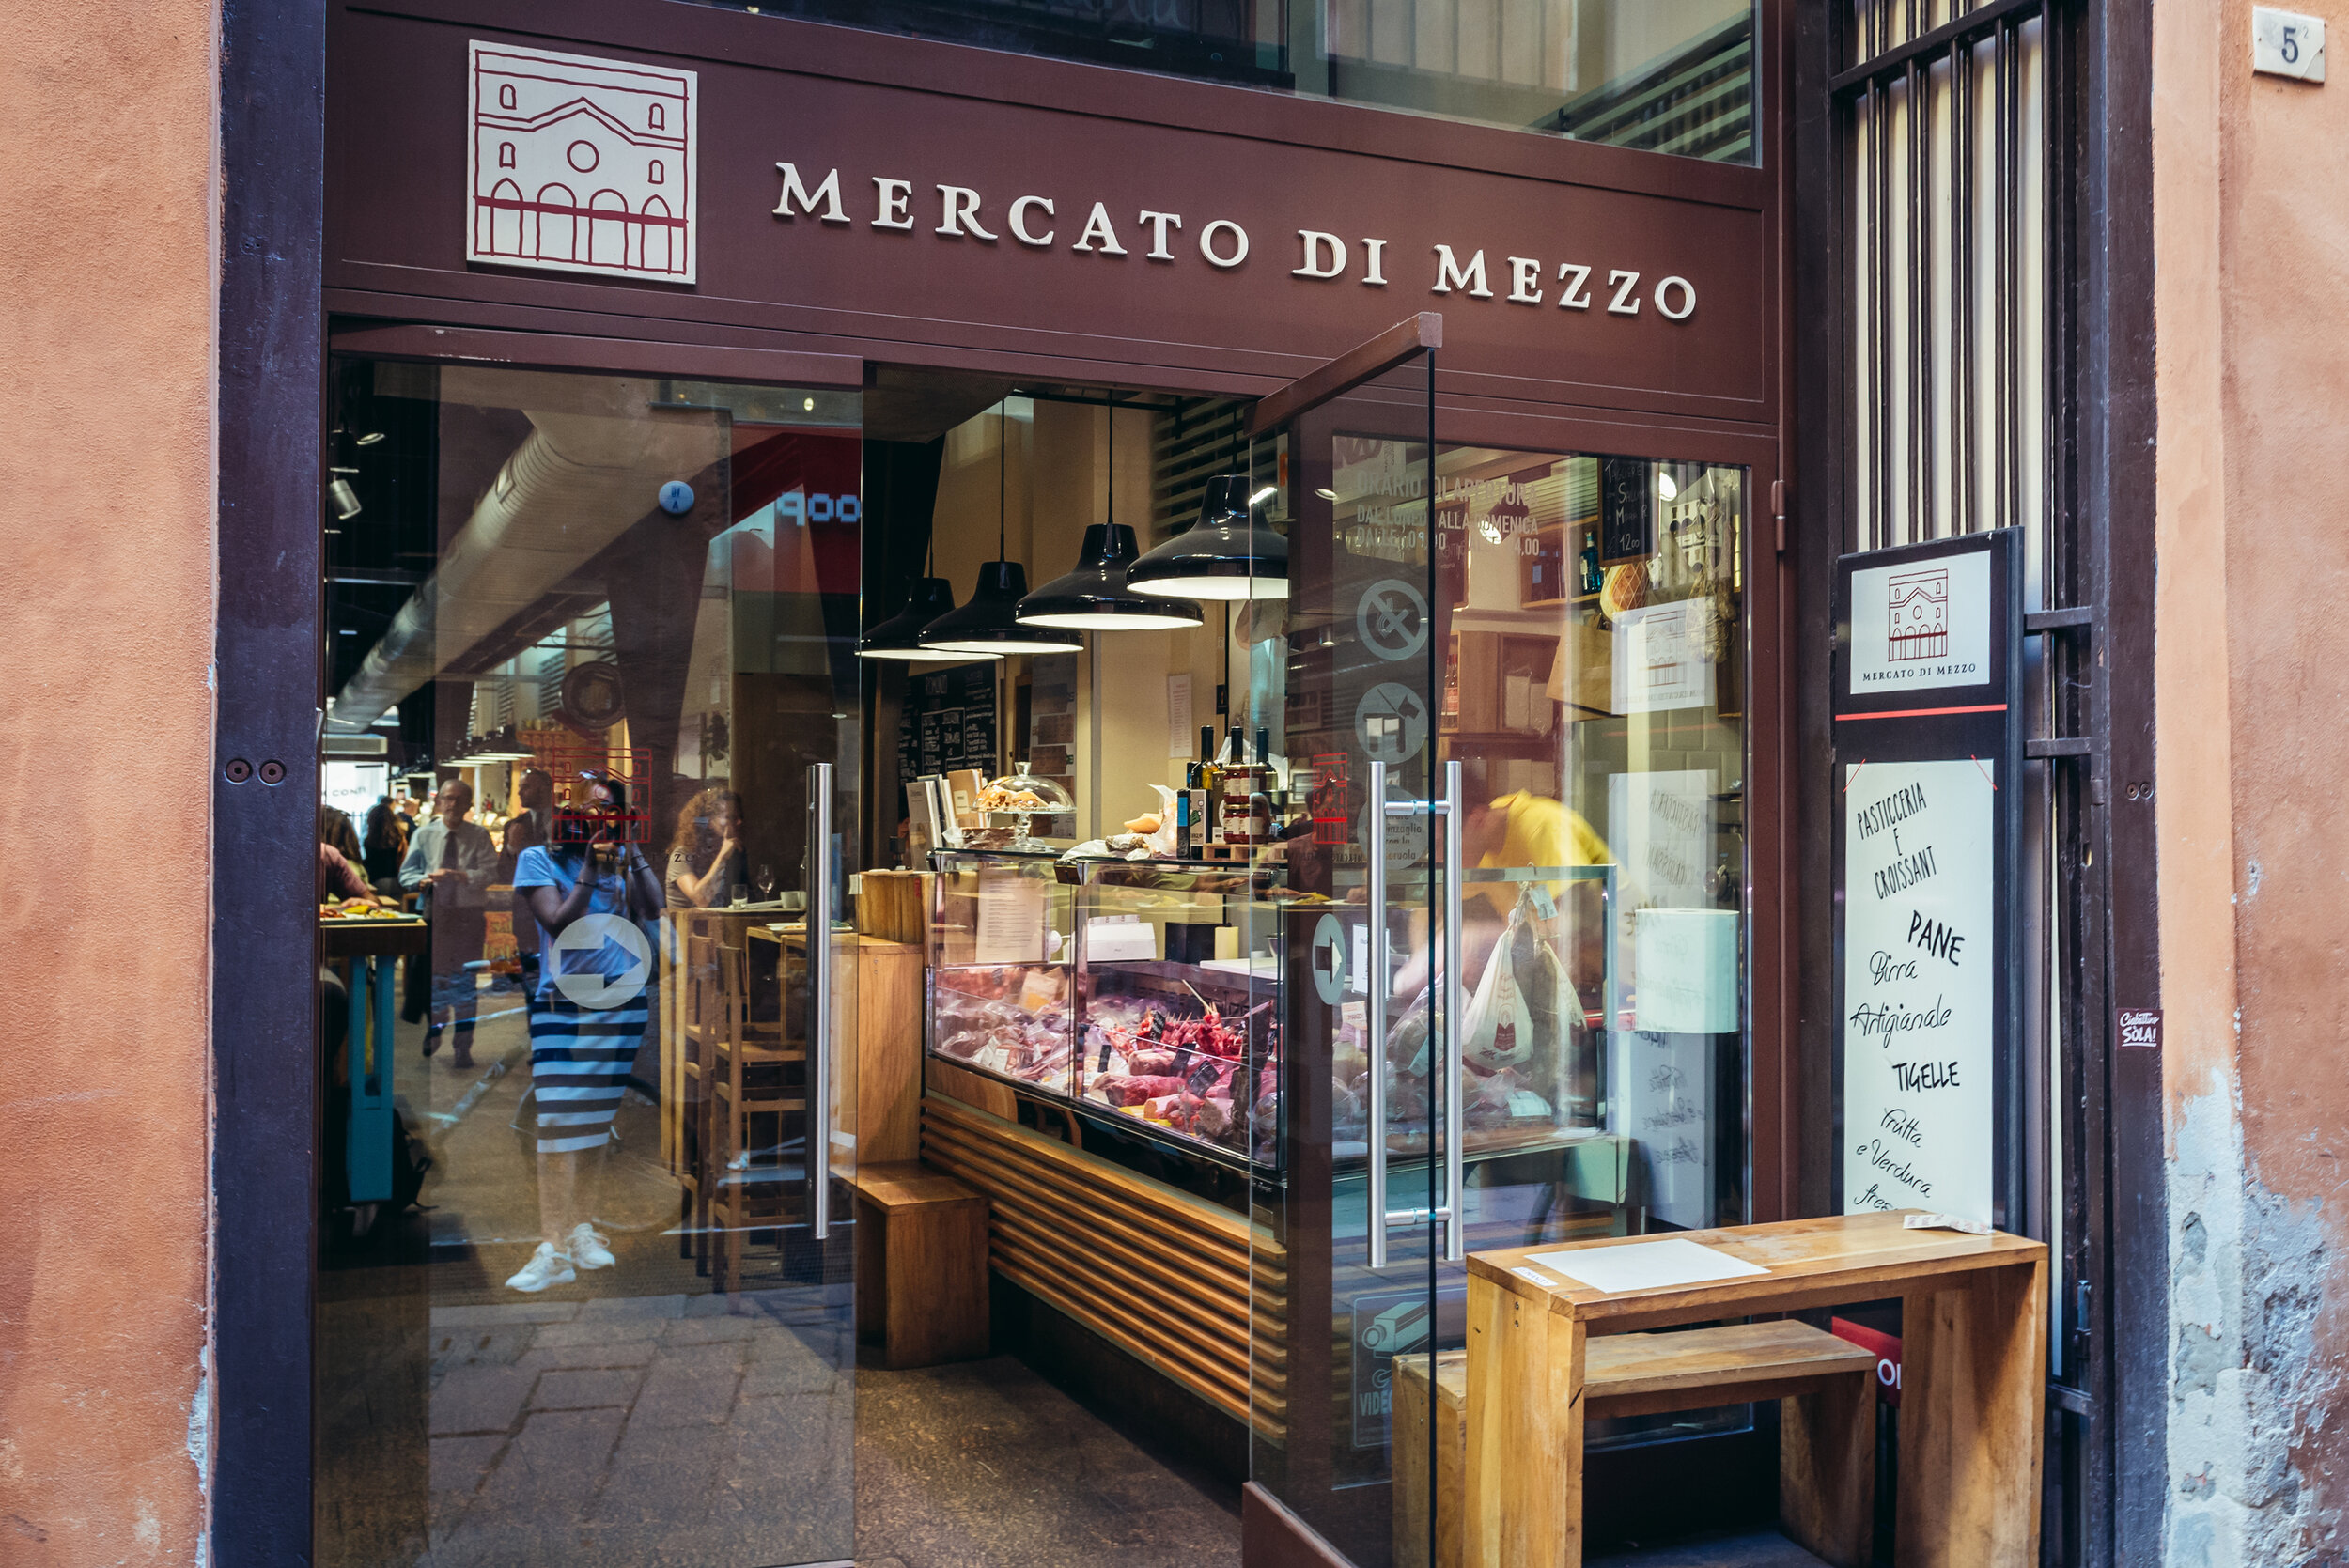 Visit Bologna food market, Mercato Di Mezzo, for regional Emilia-Romagna foods.